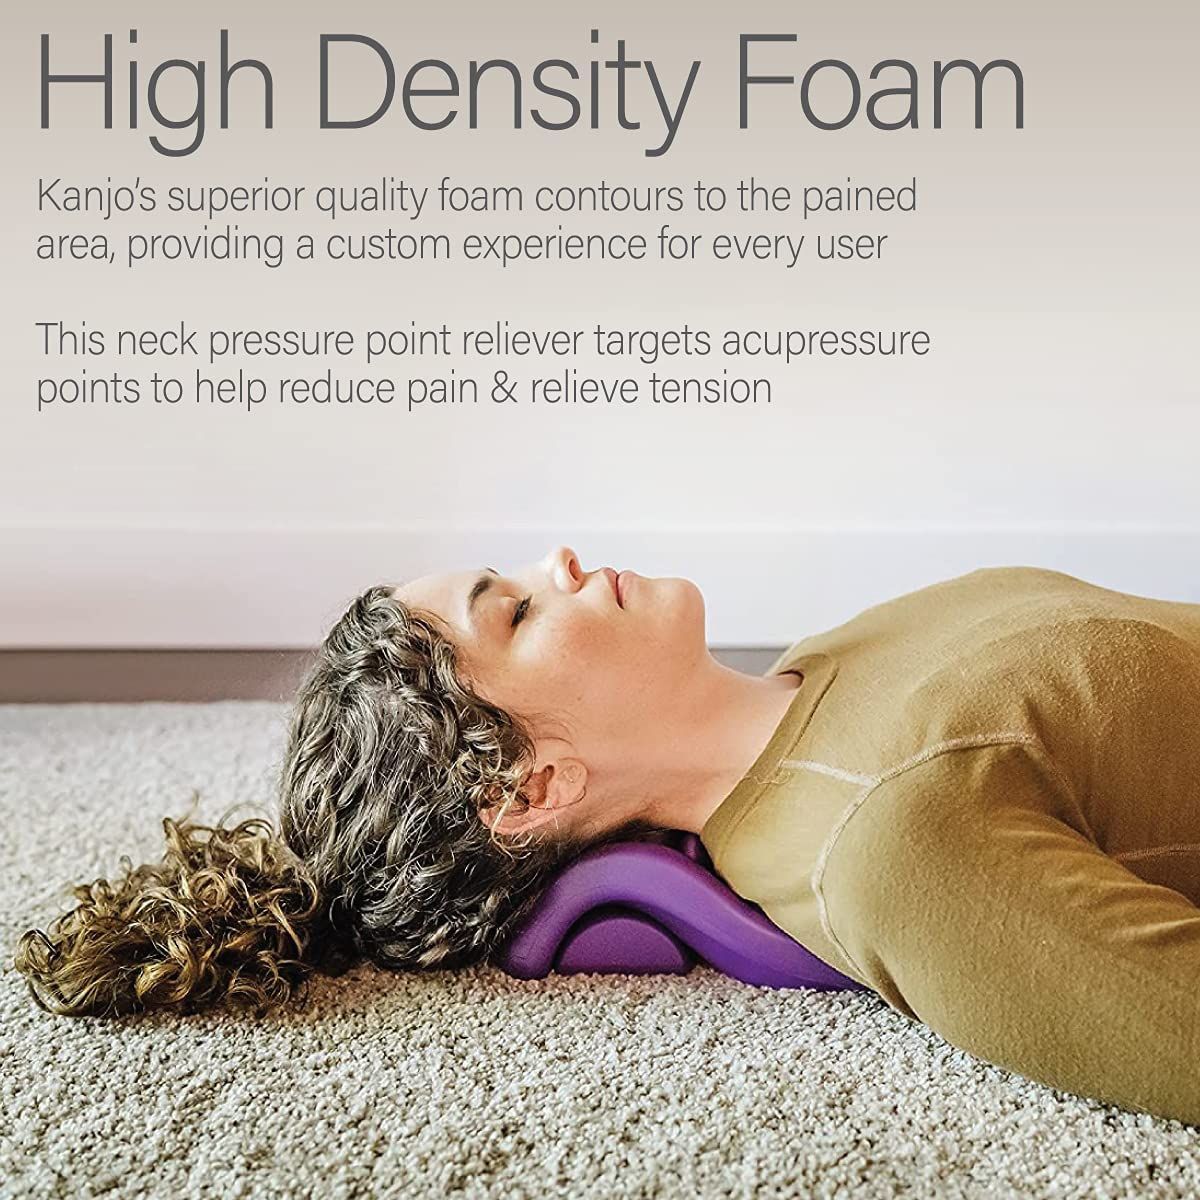 Kanjo Flex Firm Acupressure Neck Pain Relief Cushion